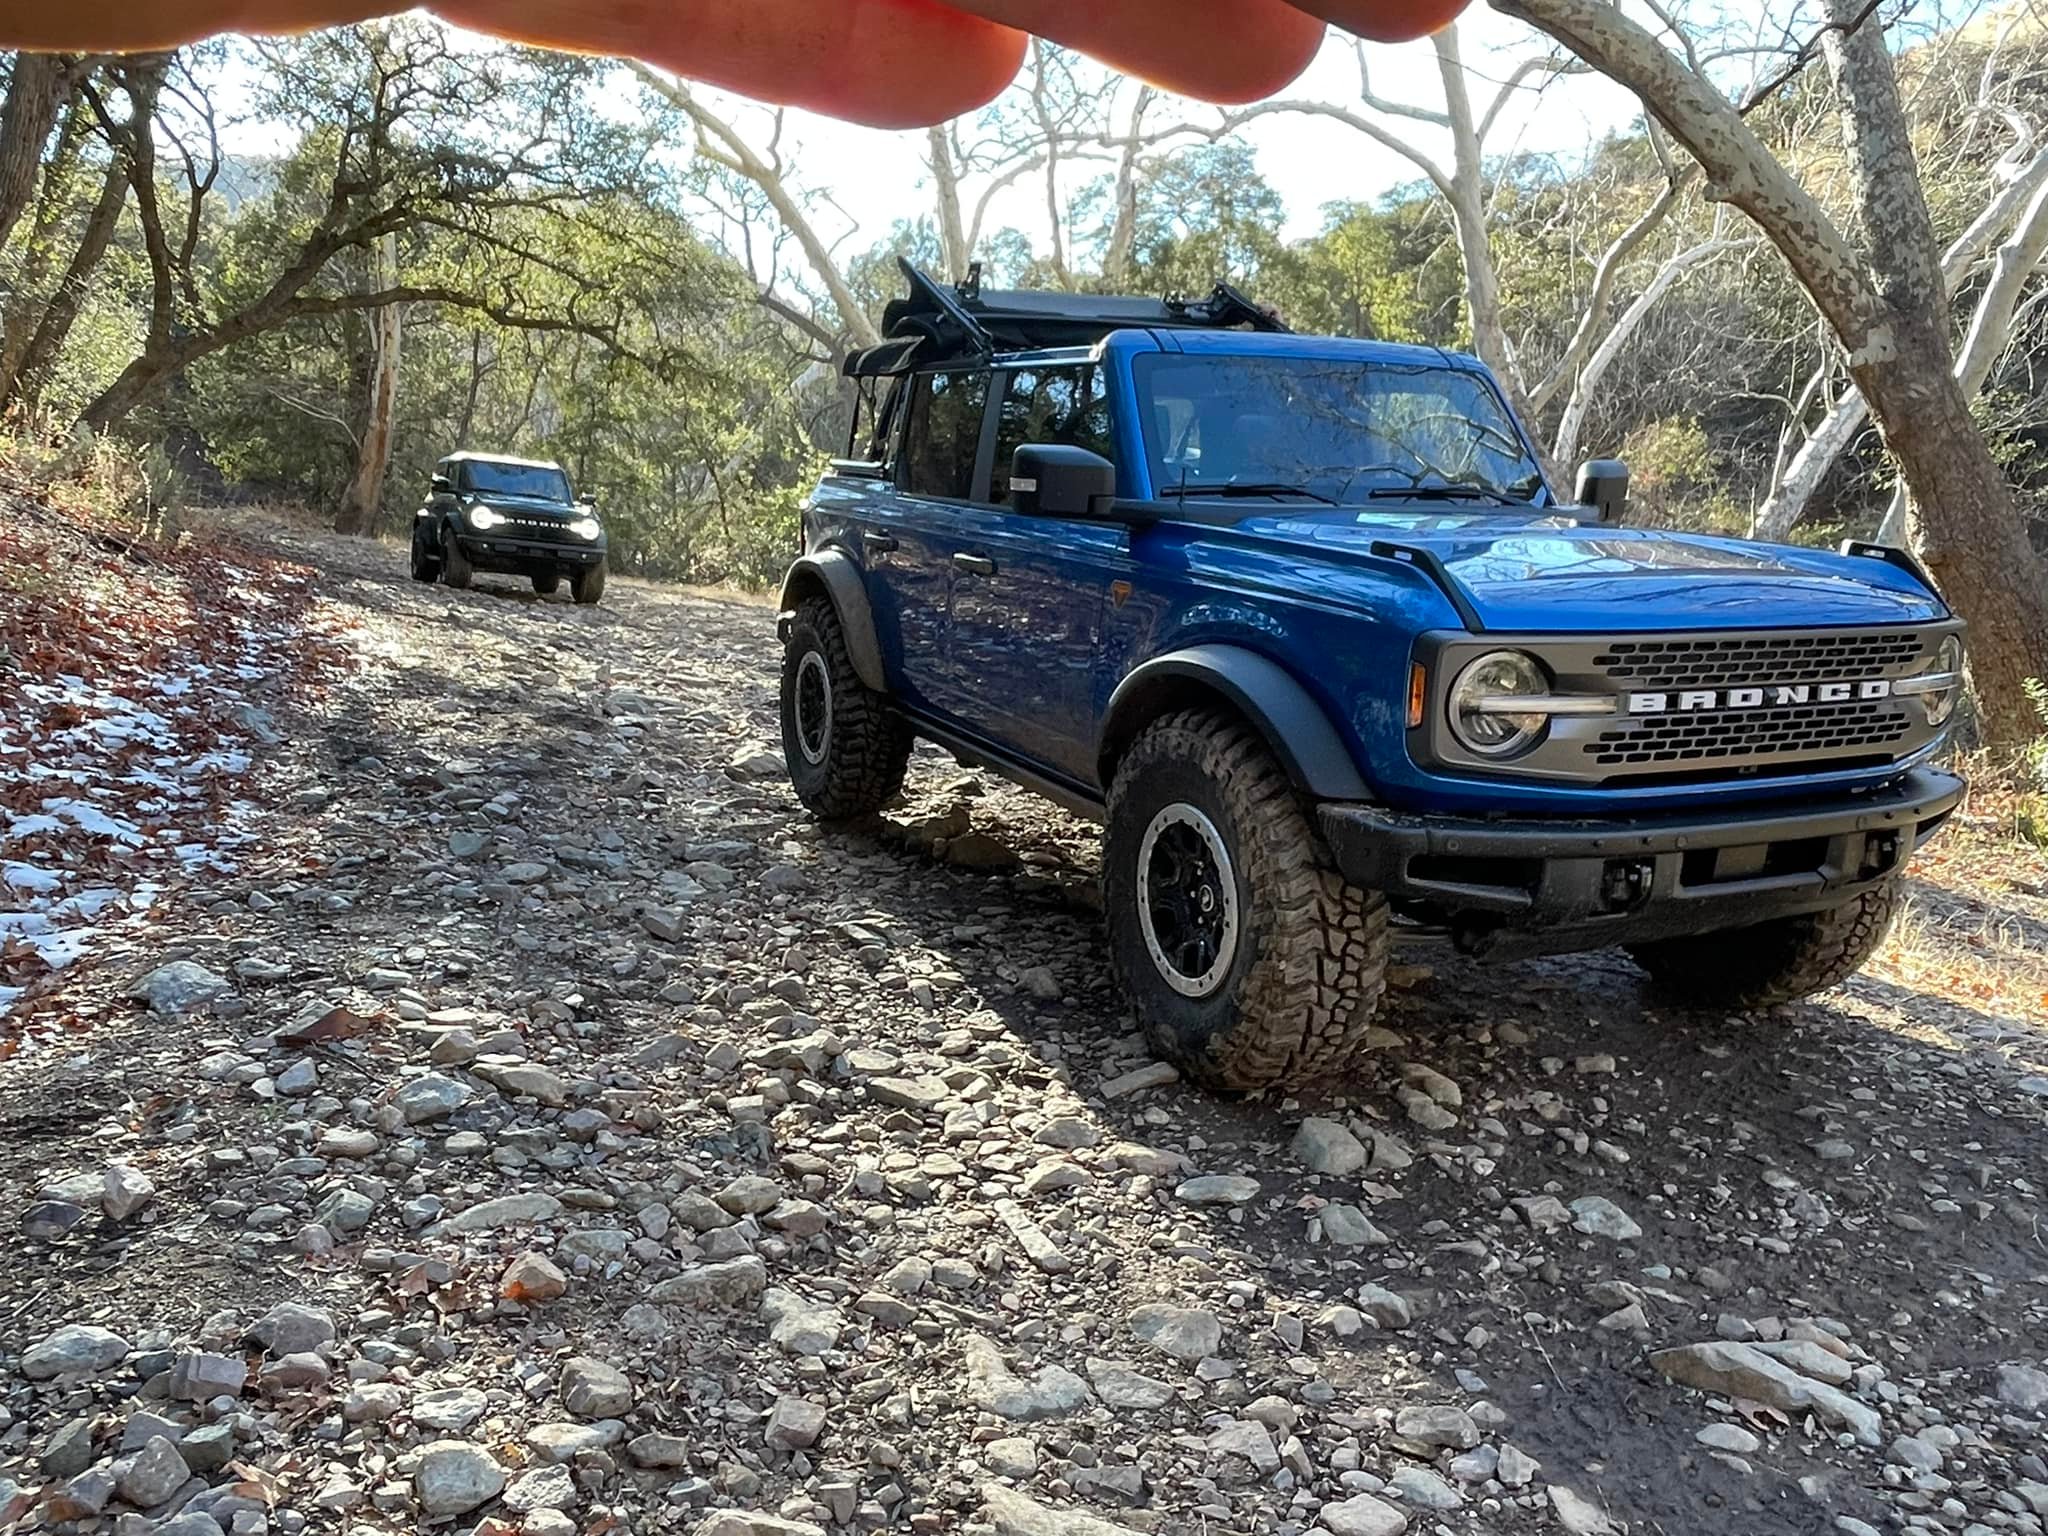 Ford Bronco Rockdawg84's Badsquach 21 Adventure and Build Thread "Wild Blue" WB Rice Peak 4